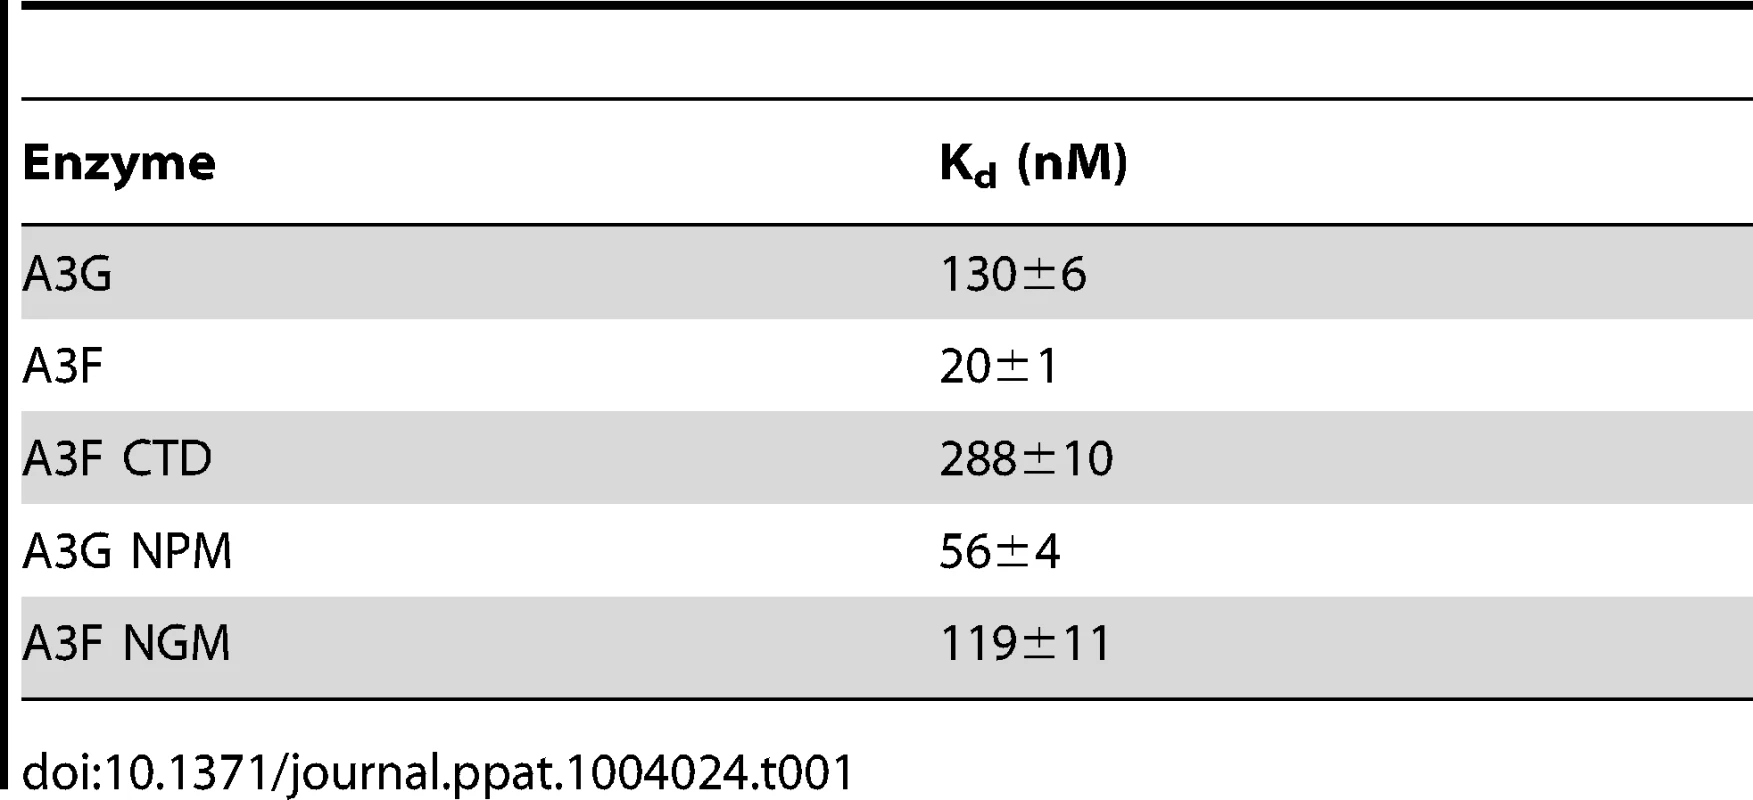 Comparison of apparent dissociation constants (K&lt;sub&gt;d&lt;/sub&gt;) from ssDNA of A3G and A3F wild-type and mutants.